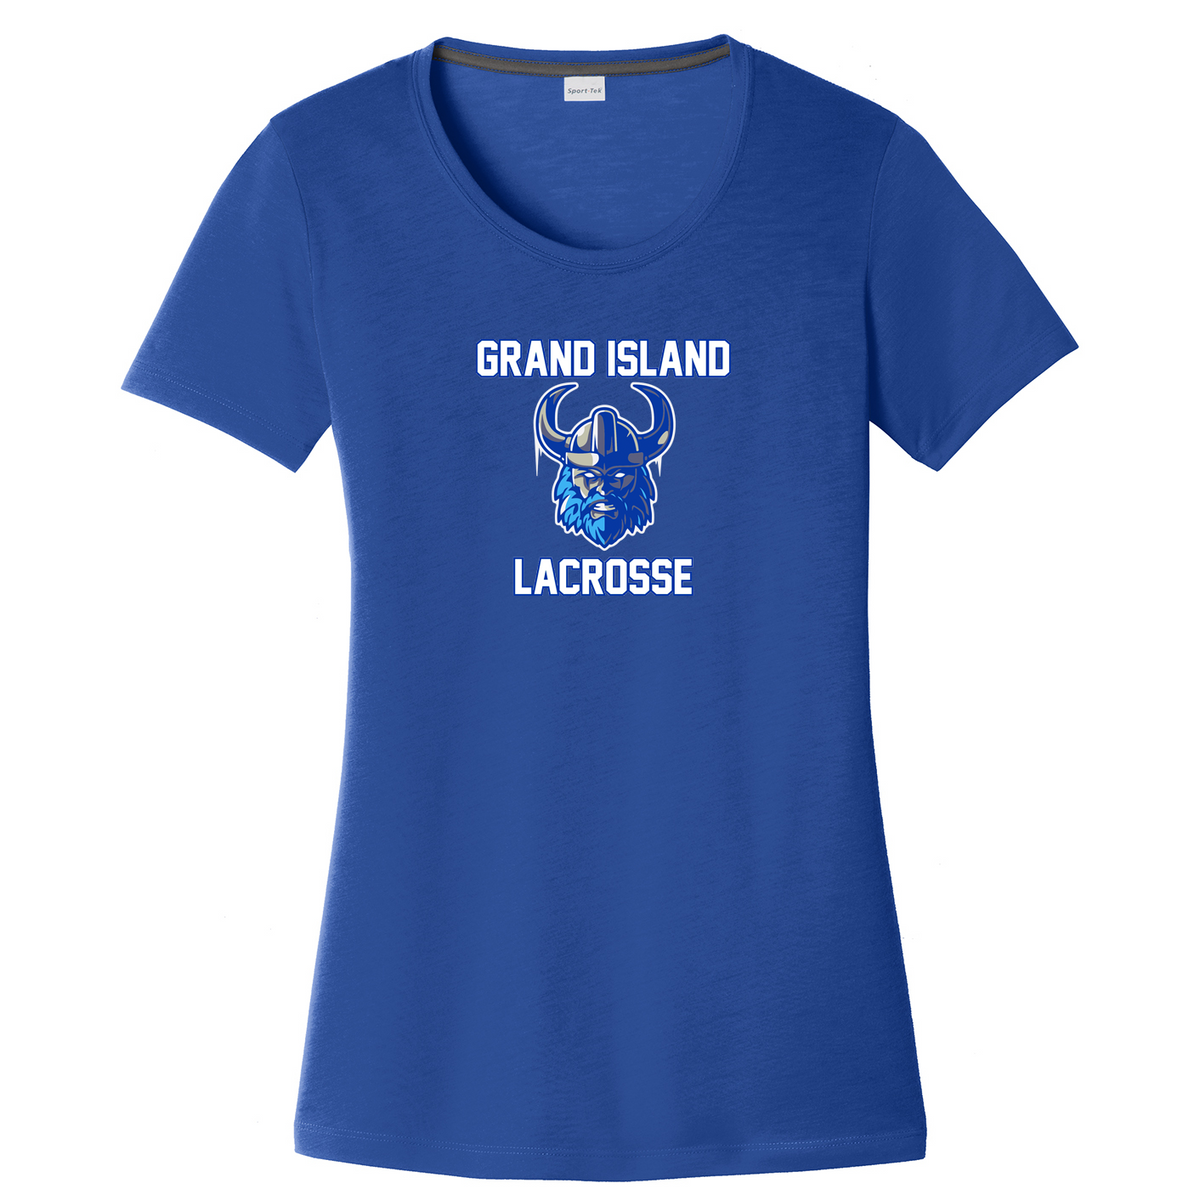 Grand Island Lacrosse Women's CottonTouch Performance T-Shirt